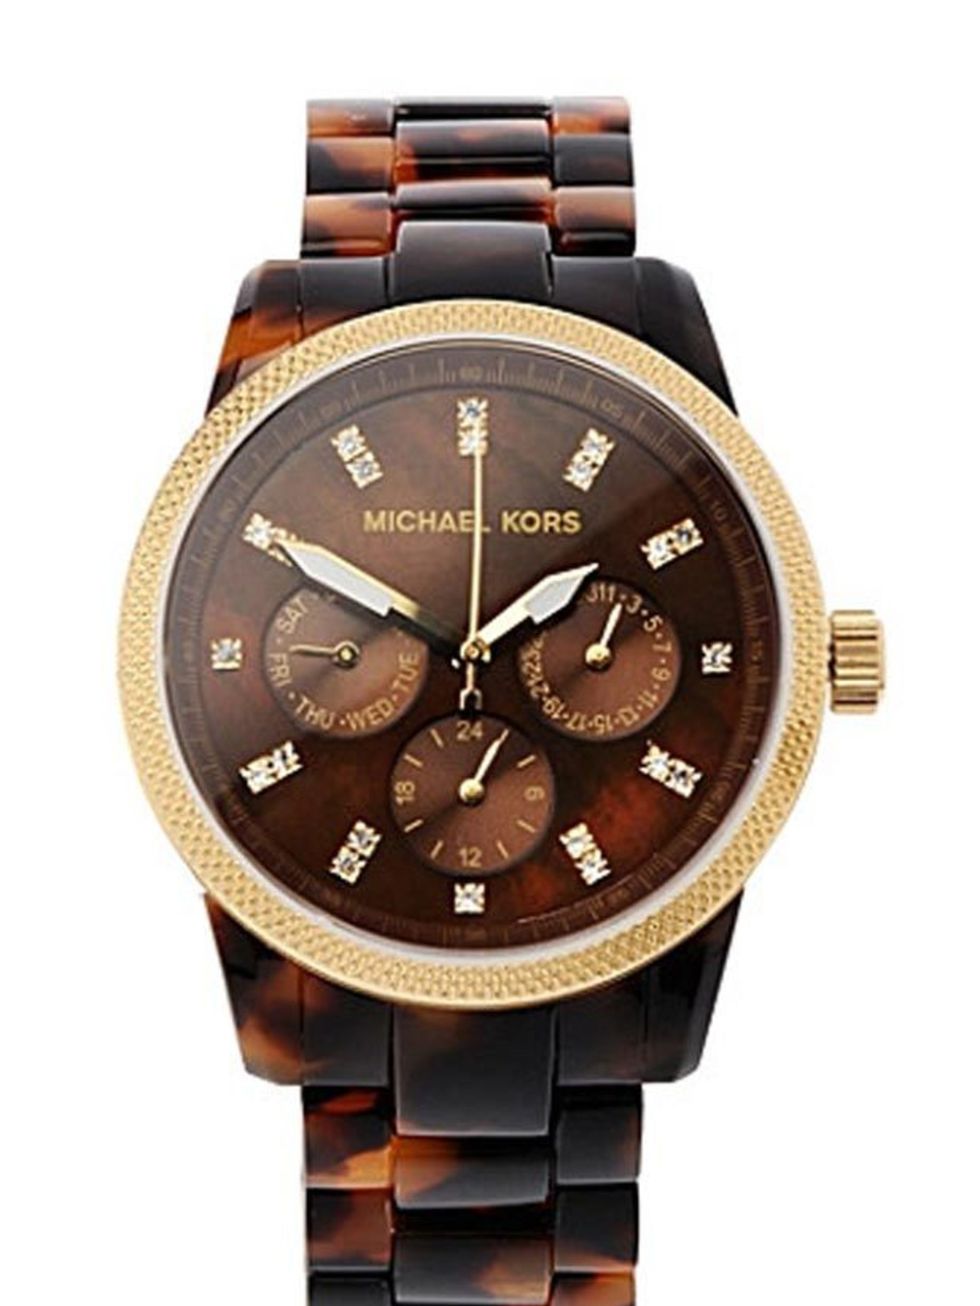 <p>Michael Kors tortoiseshell watch, £169, at <a href="http://www.selfridges.com/en/Accessories/Tortoise-shell-chronograph-watch_759-10001-MK5038/">Selfridges</a> </p>